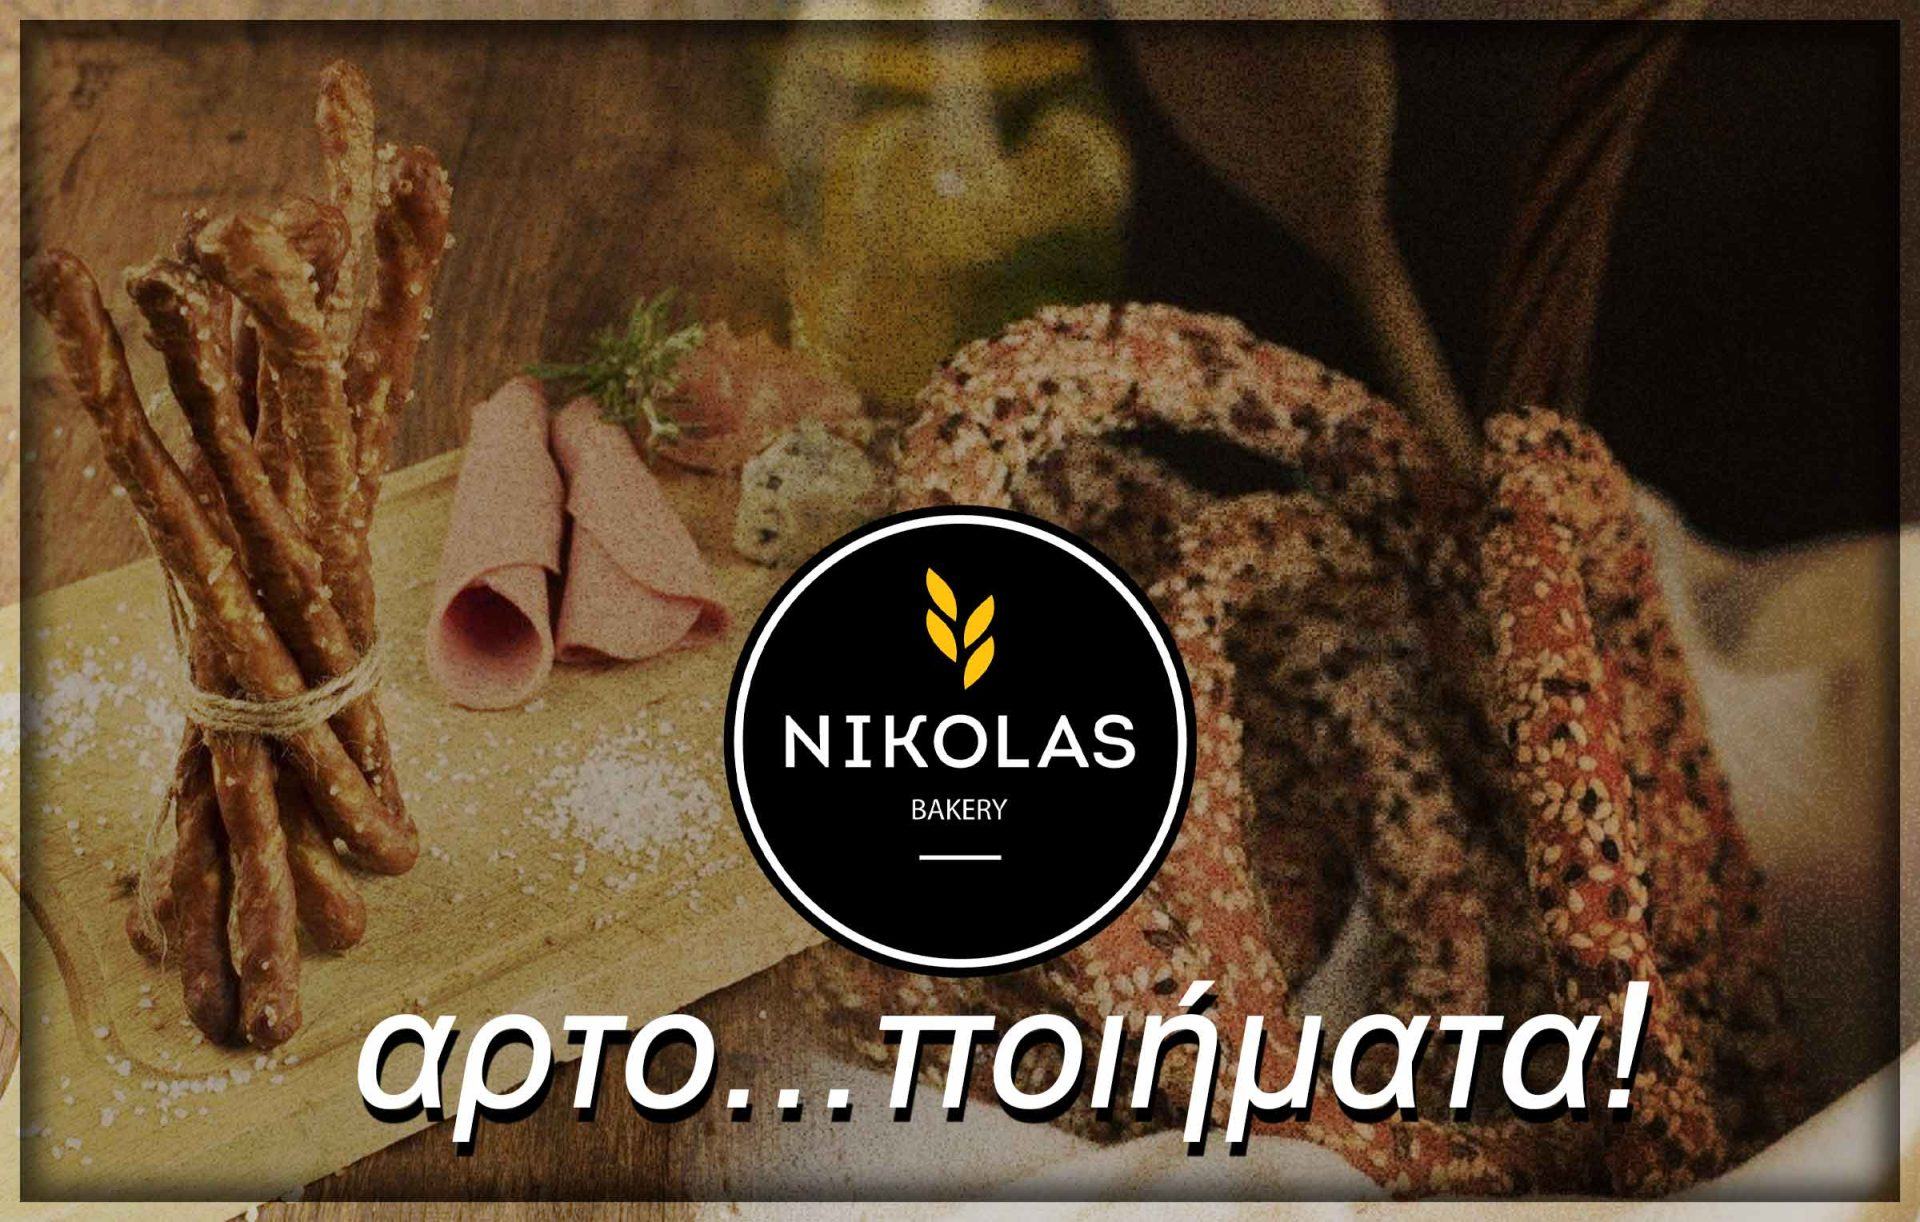 Nikolas Bakery